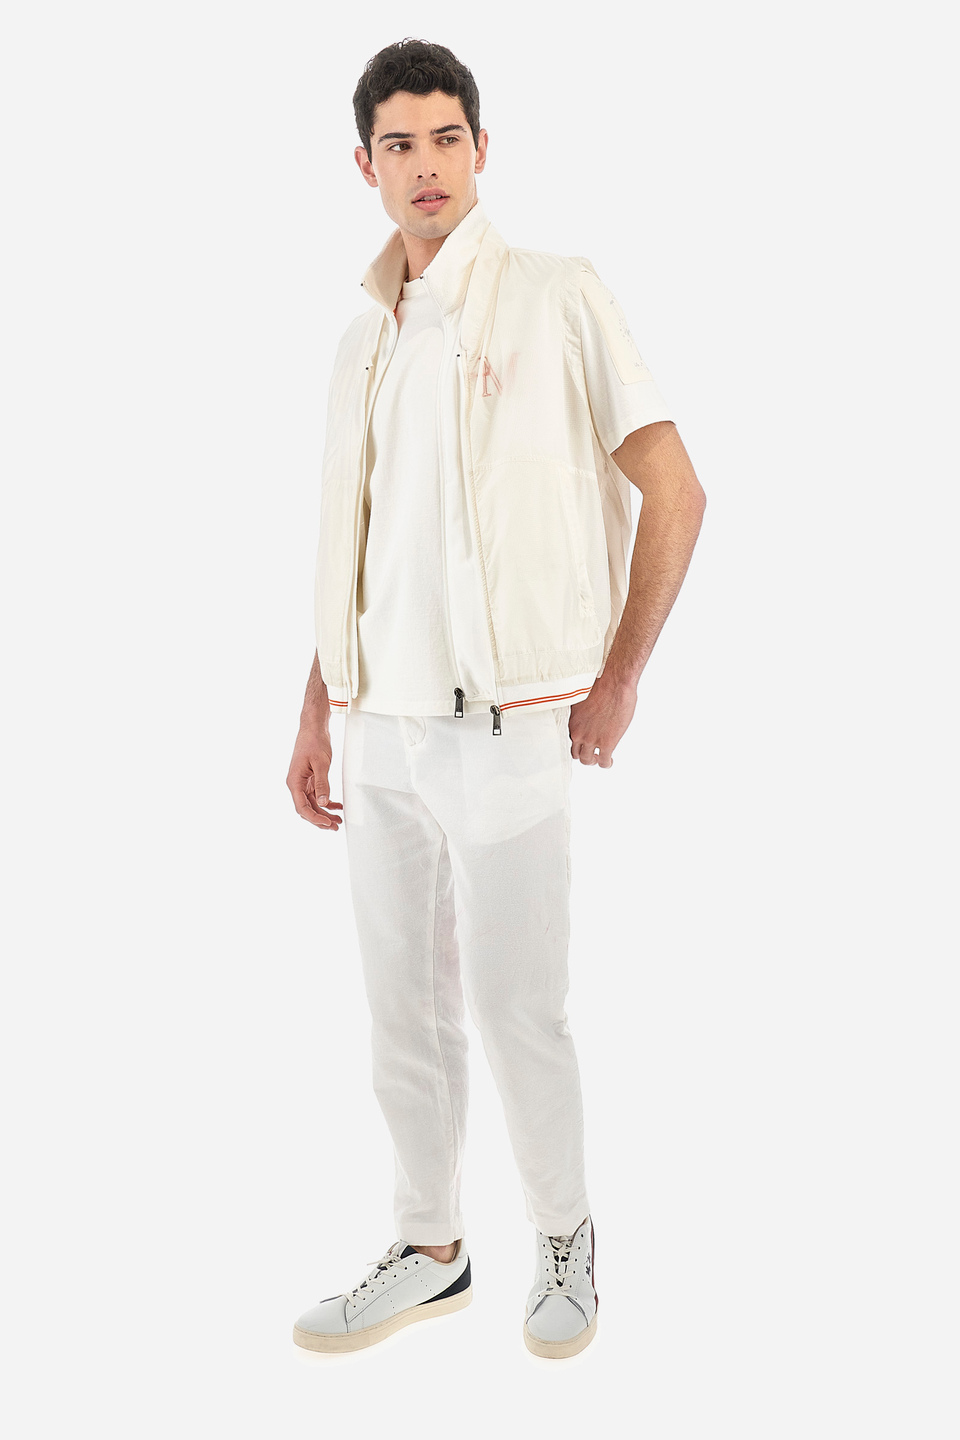 Men's vest with high collar and regular fit zip - Vermont | La Martina - Official Online Shop